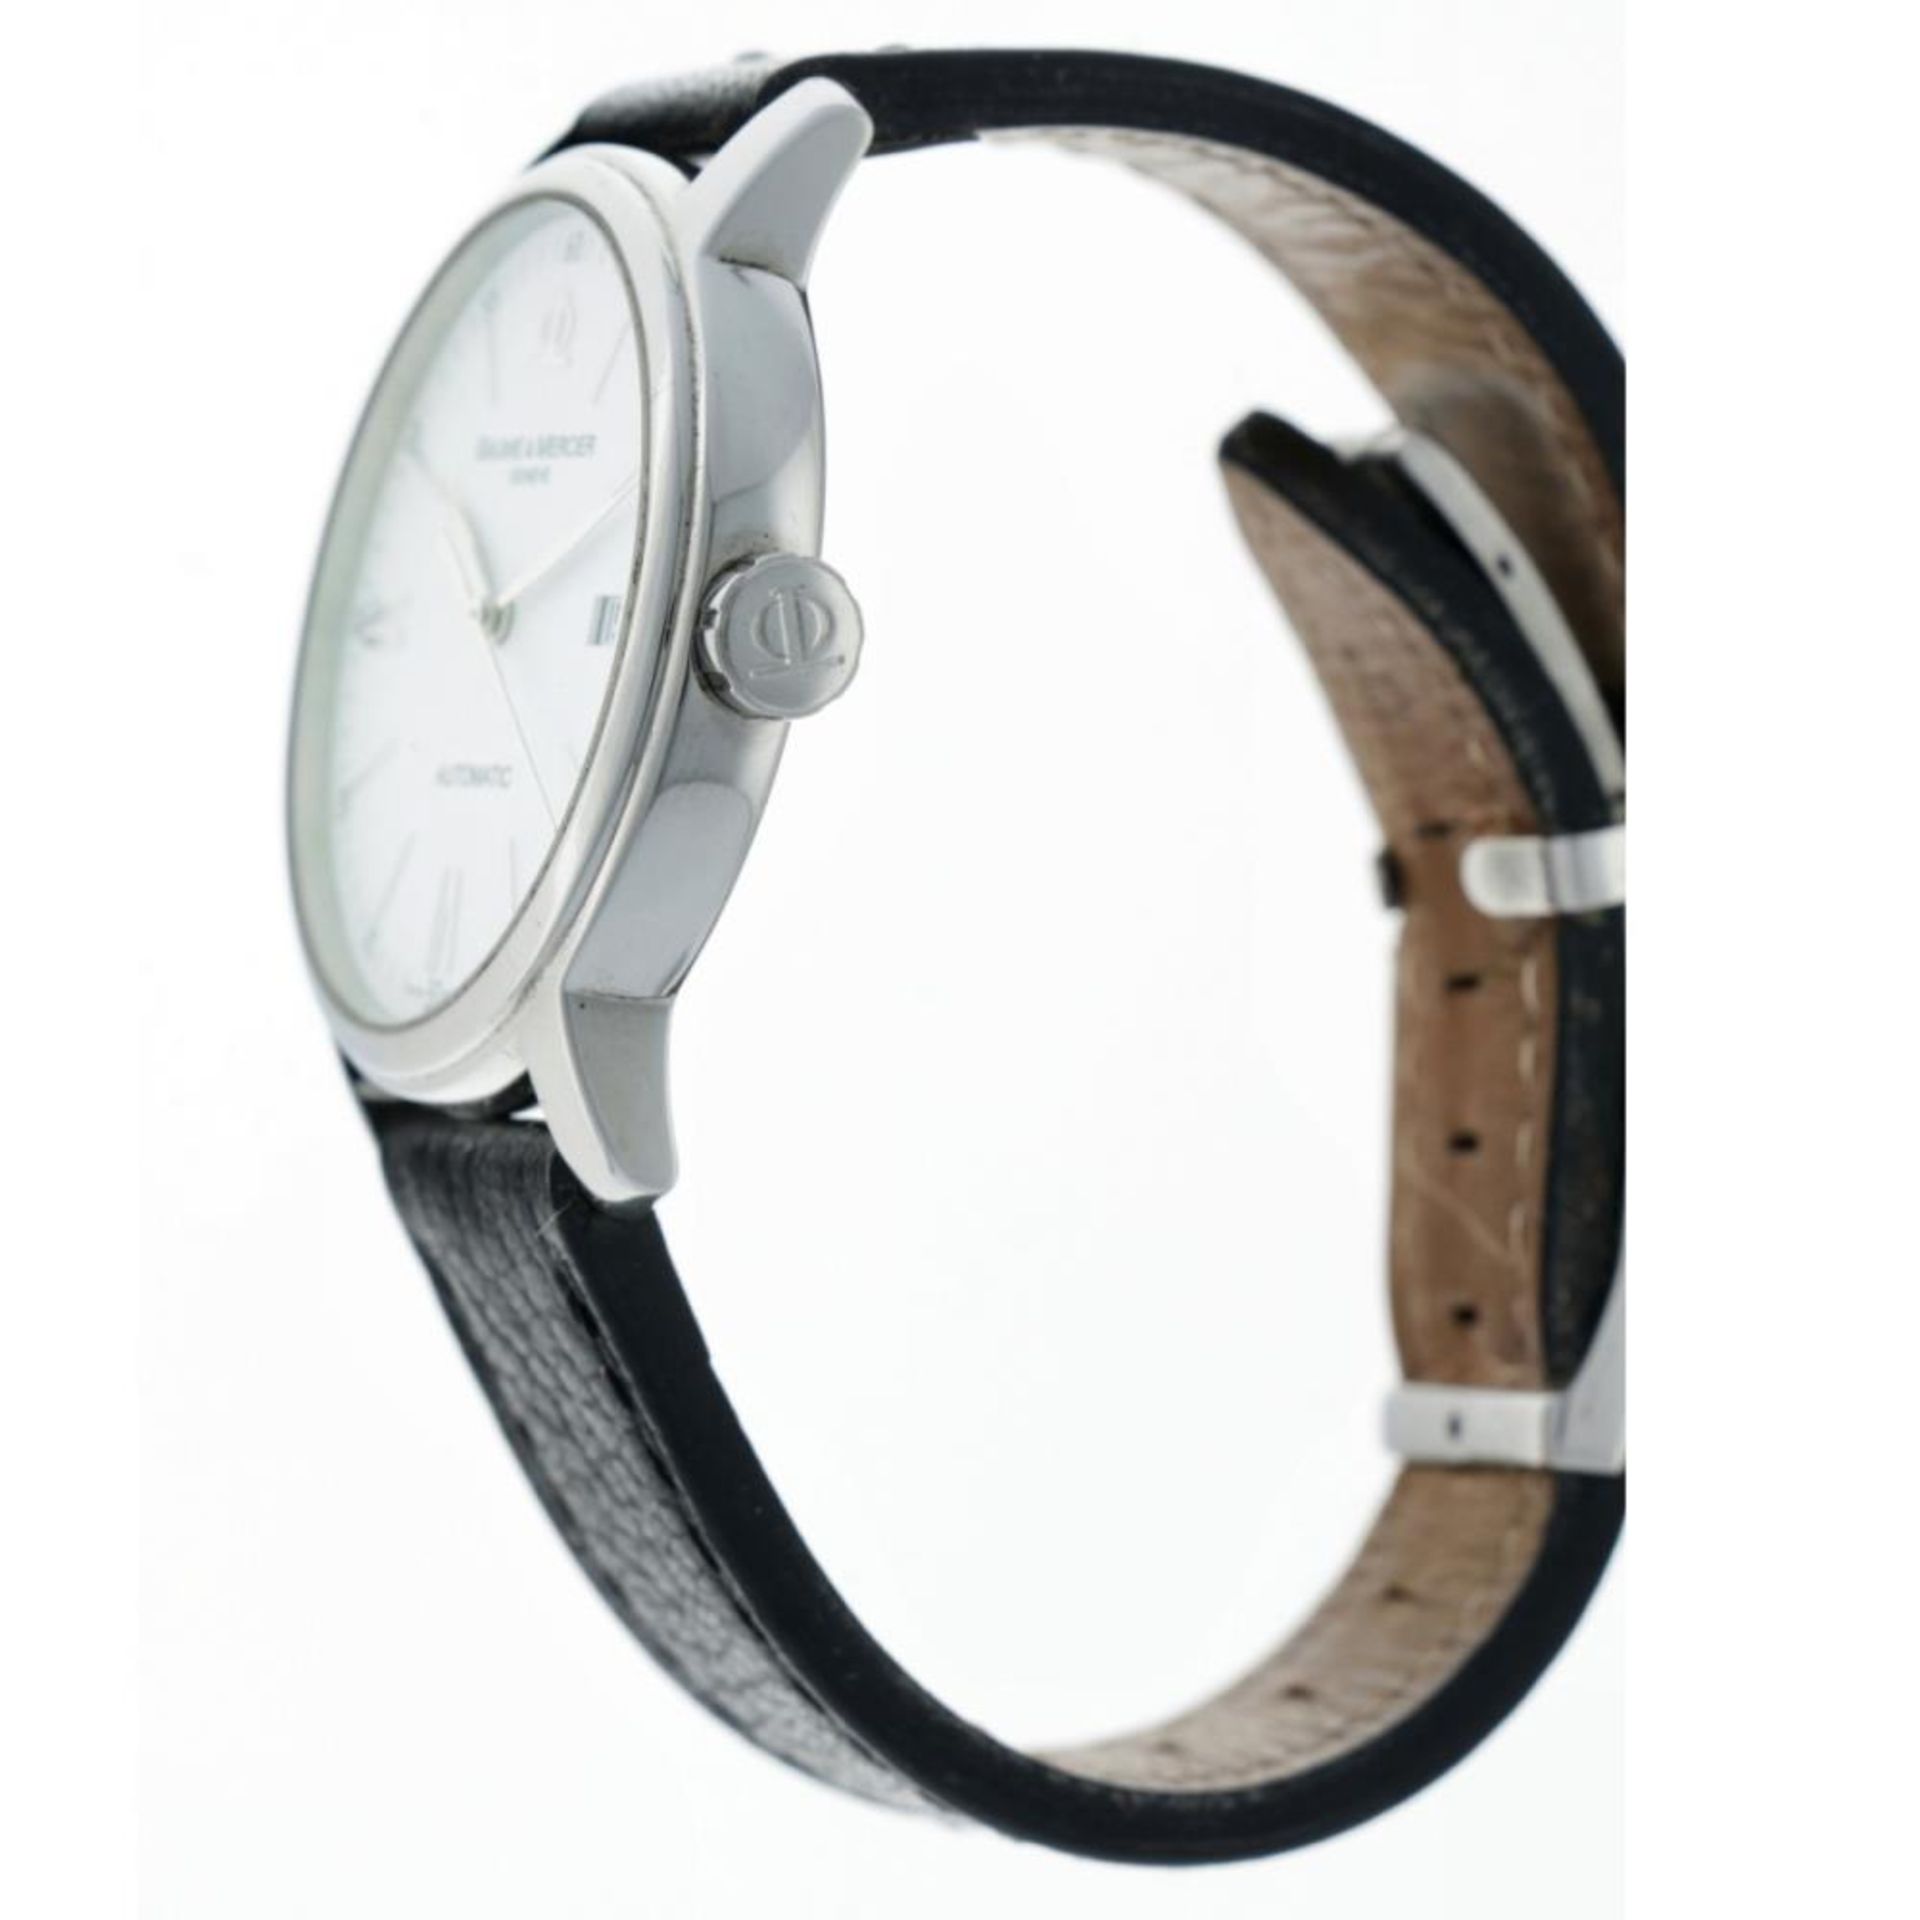 Baume & Mercier Classima 65554 - Men's watch - approx. 2010. - Image 9 of 10